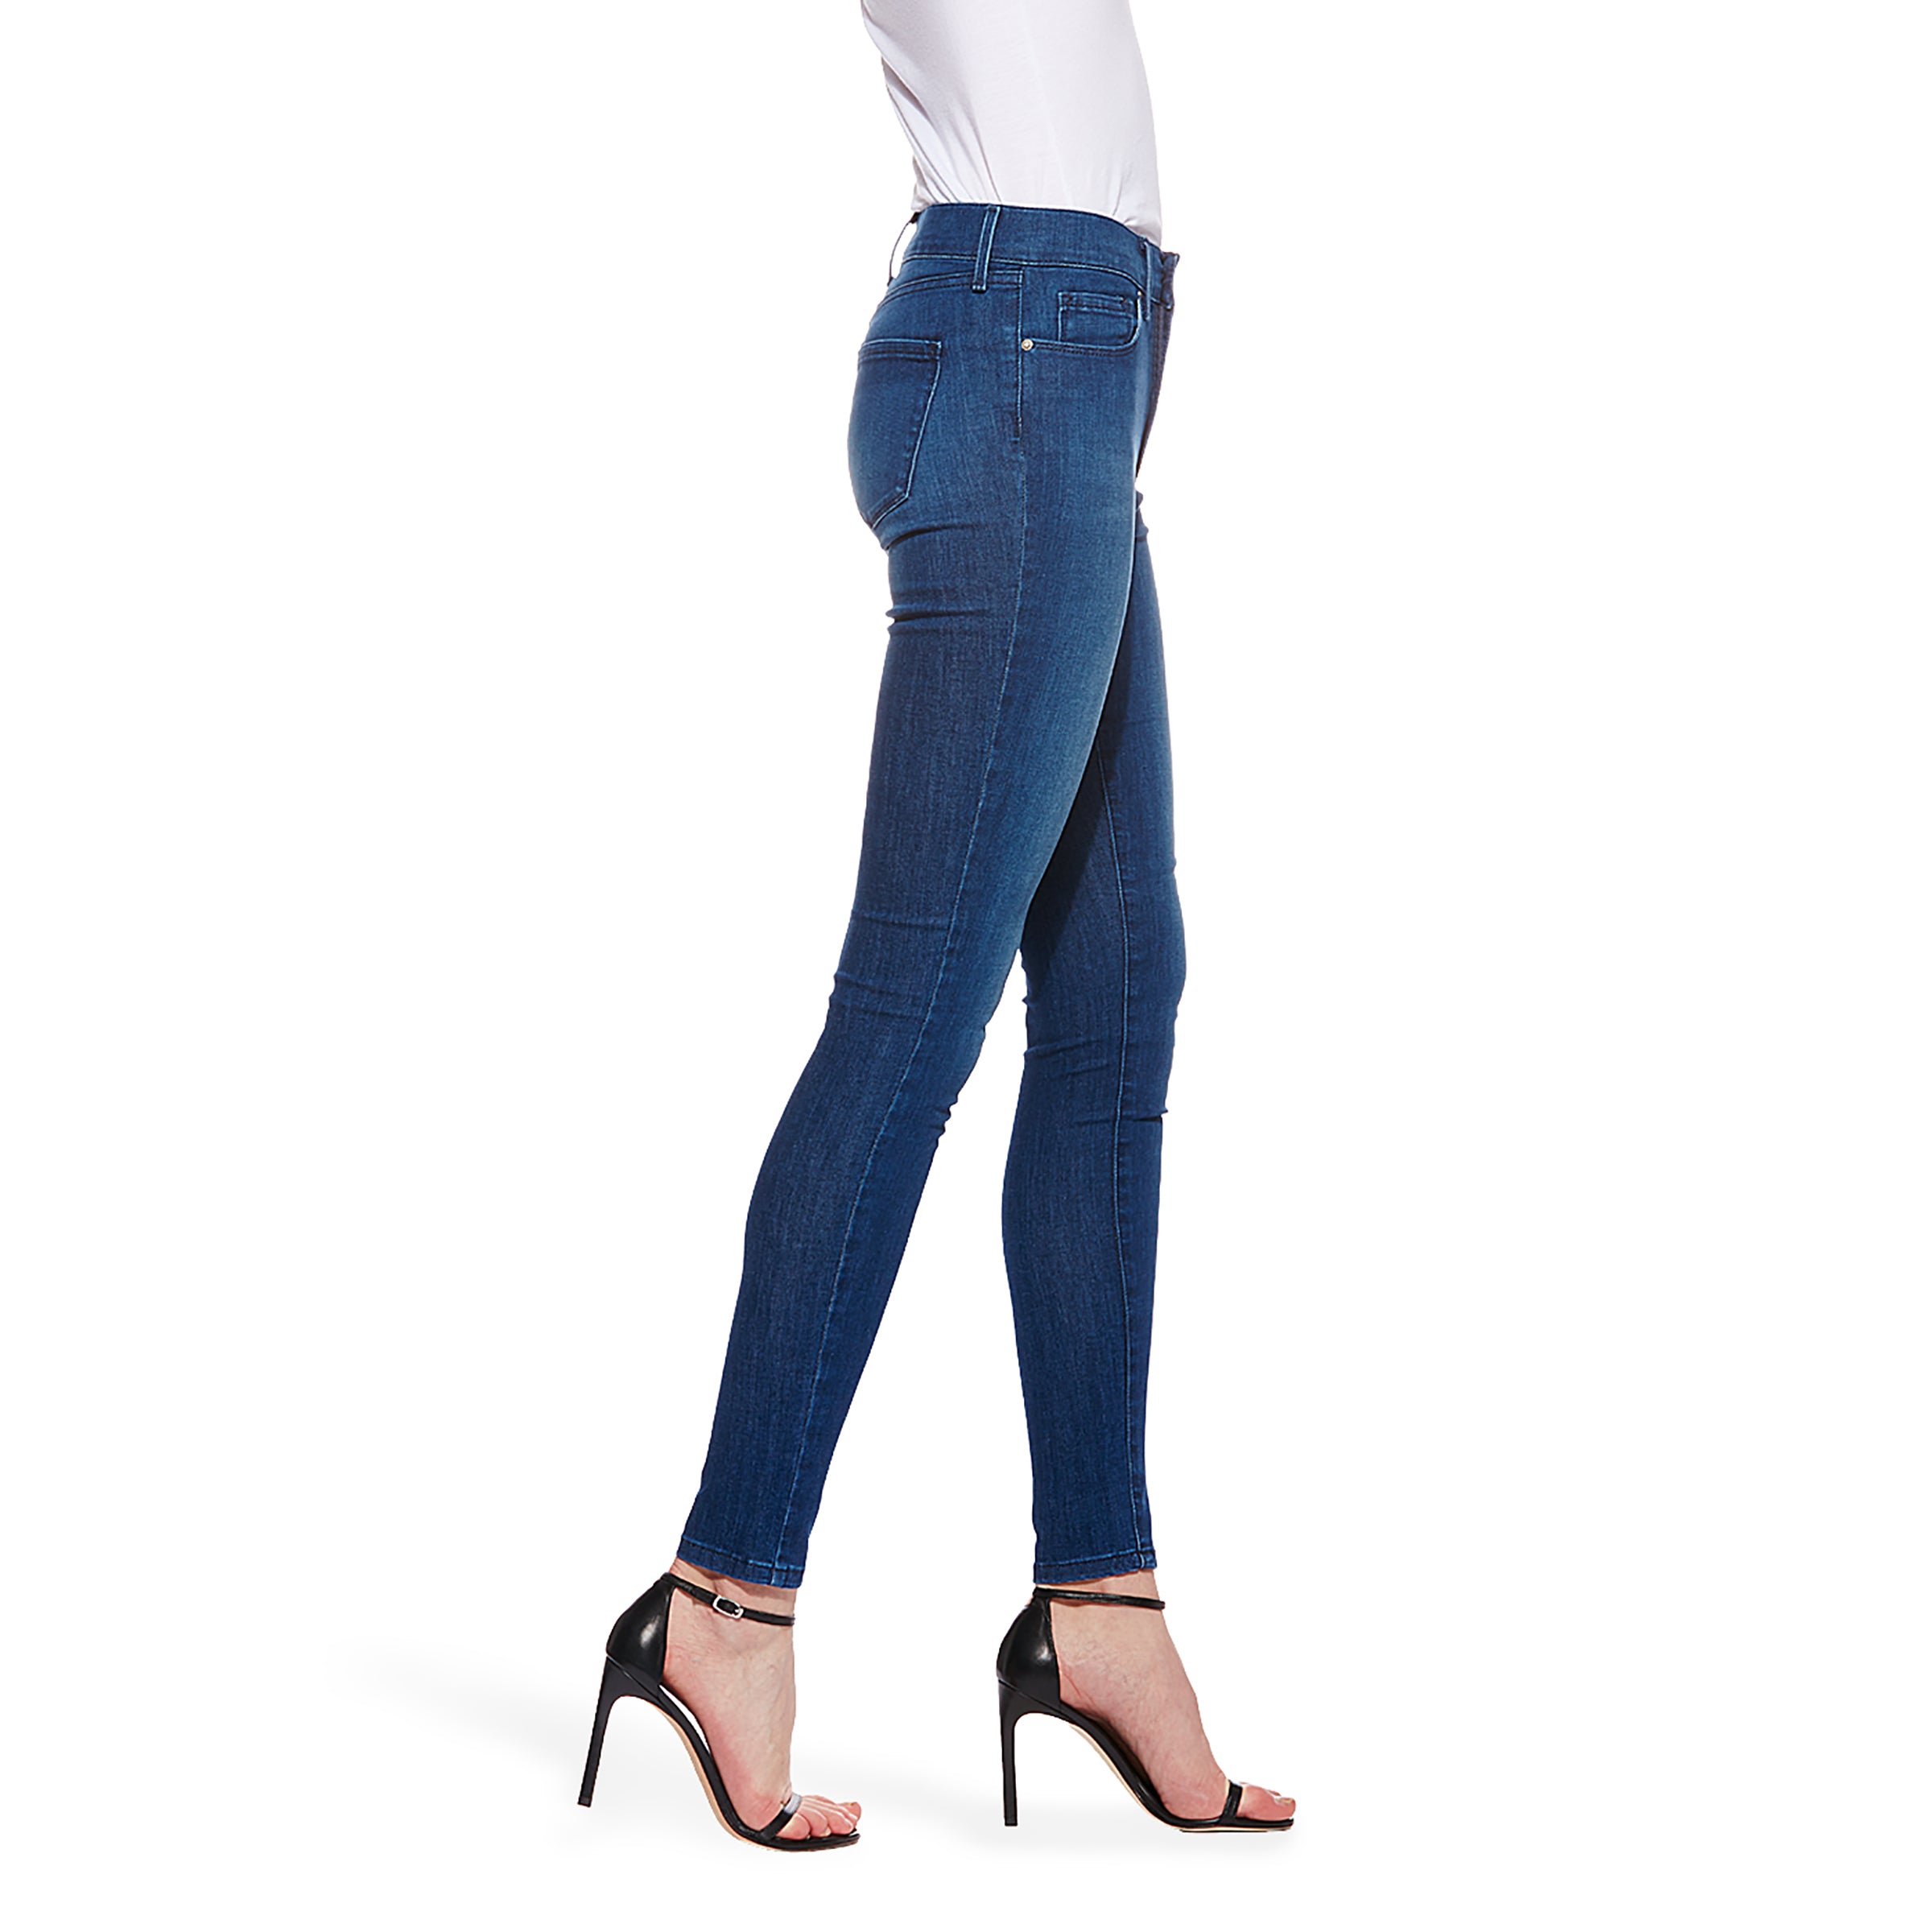 Women wearing Azul medio High Rise Skinny Carmine Jeans